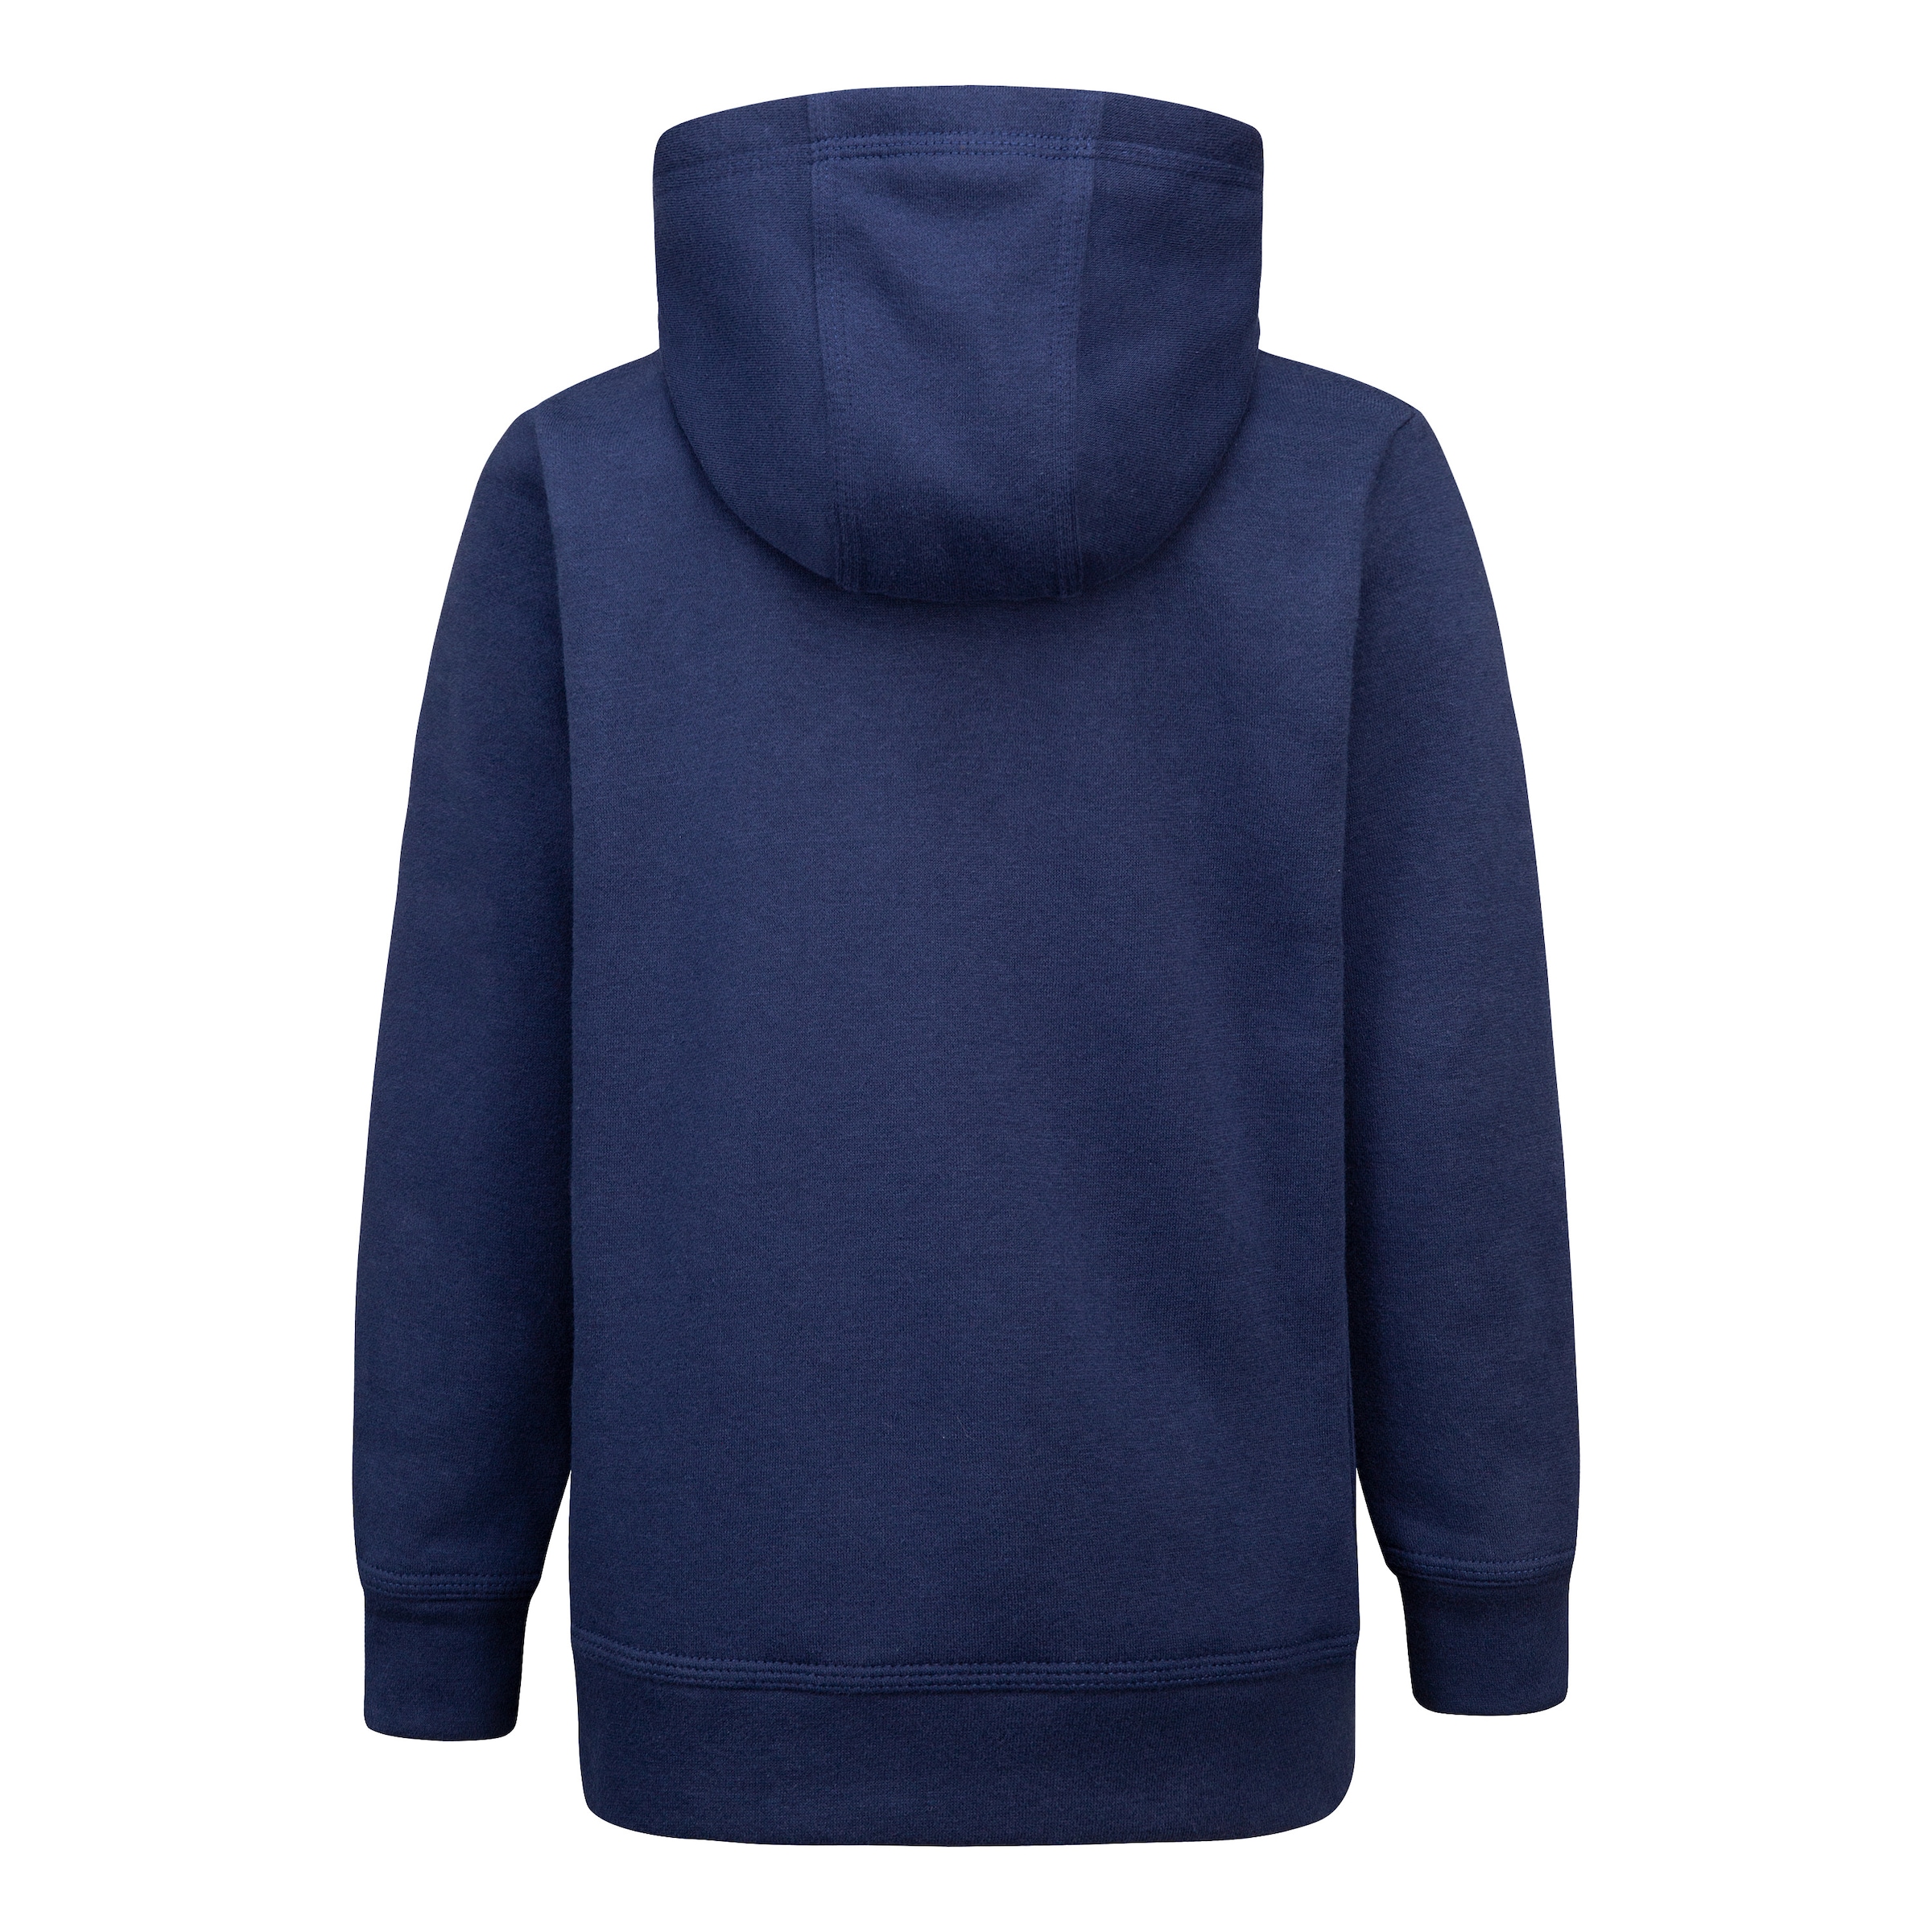 »NKB CLUB FLEECE Sportswear bei bestellen für Kinder« HOODIE - OTTO PO Nike Kapuzensweatshirt